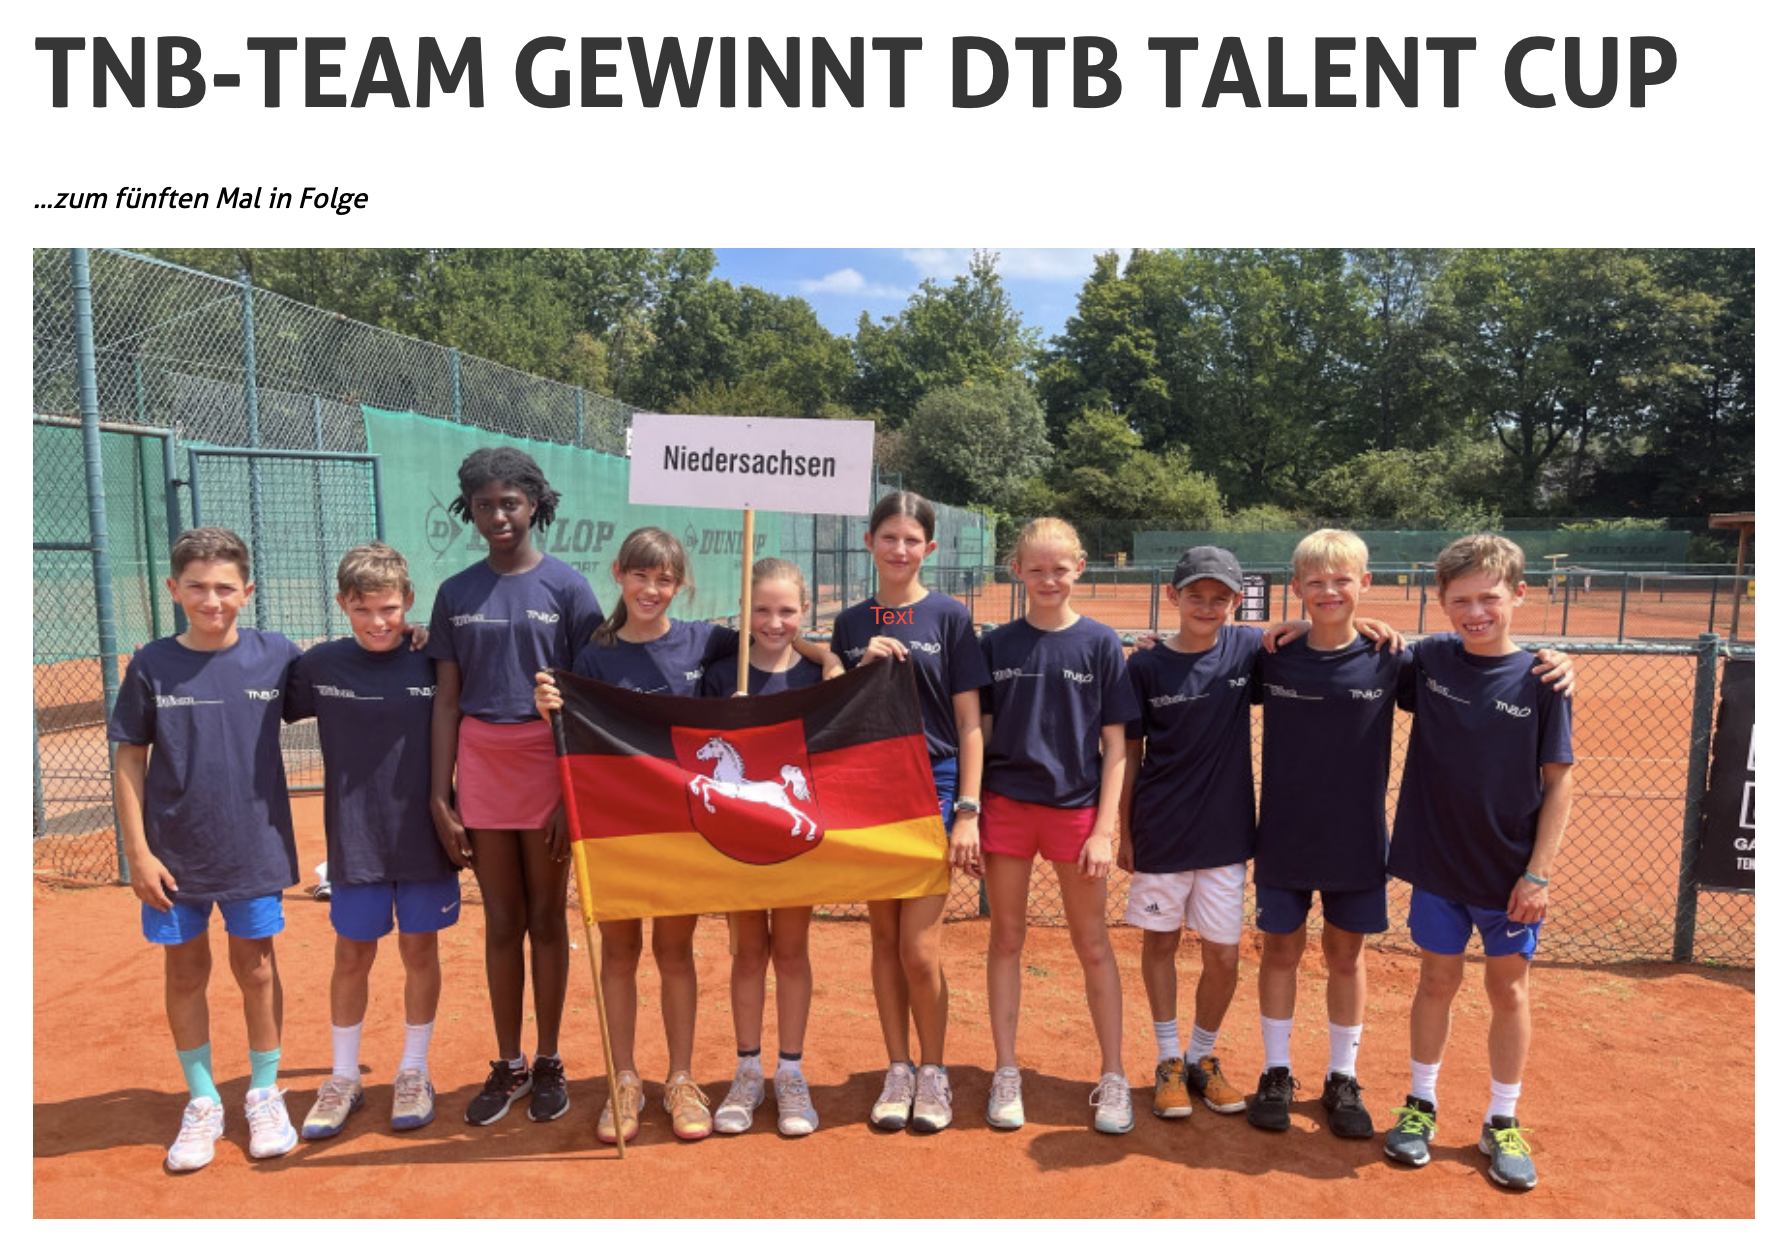 Team des TNB beim DTB Talent-Cup Juli 2022 (Quelle: TNB)